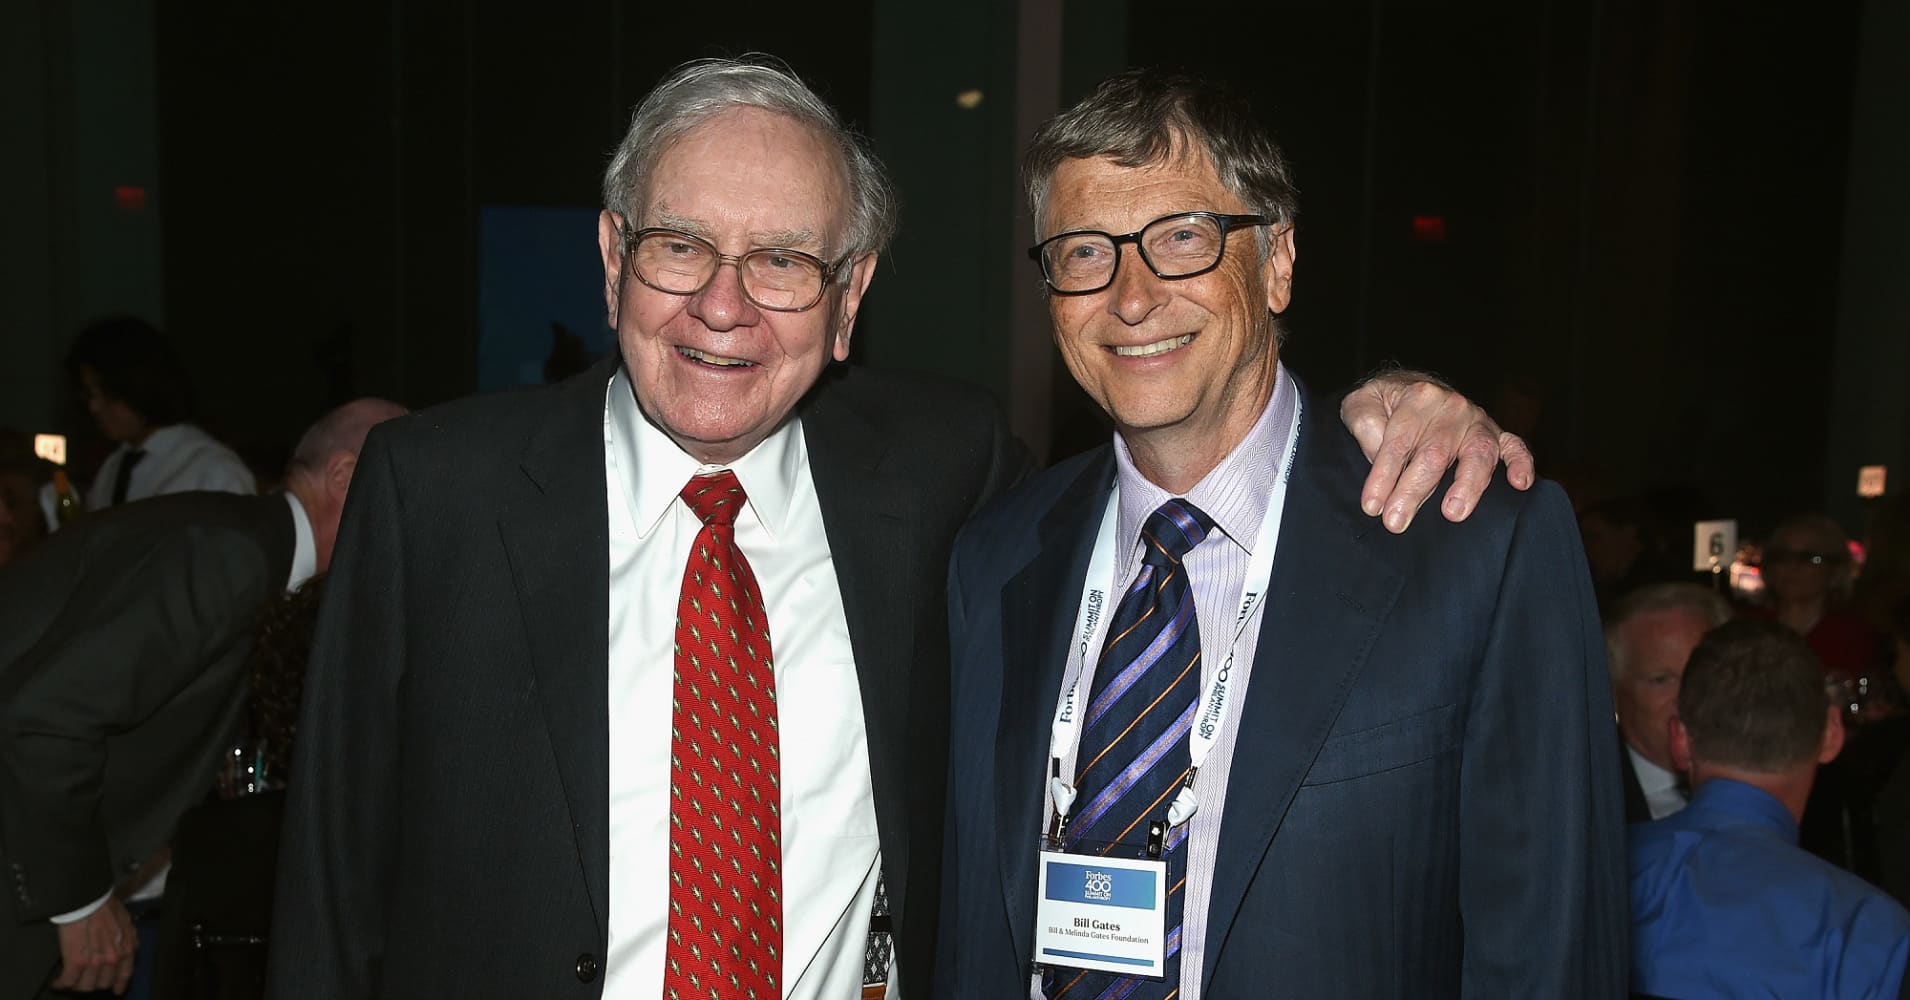 Warren Buffett and Bill Gates attend the Forbes' 2015 Philanthropy Summit Awards Dinner.